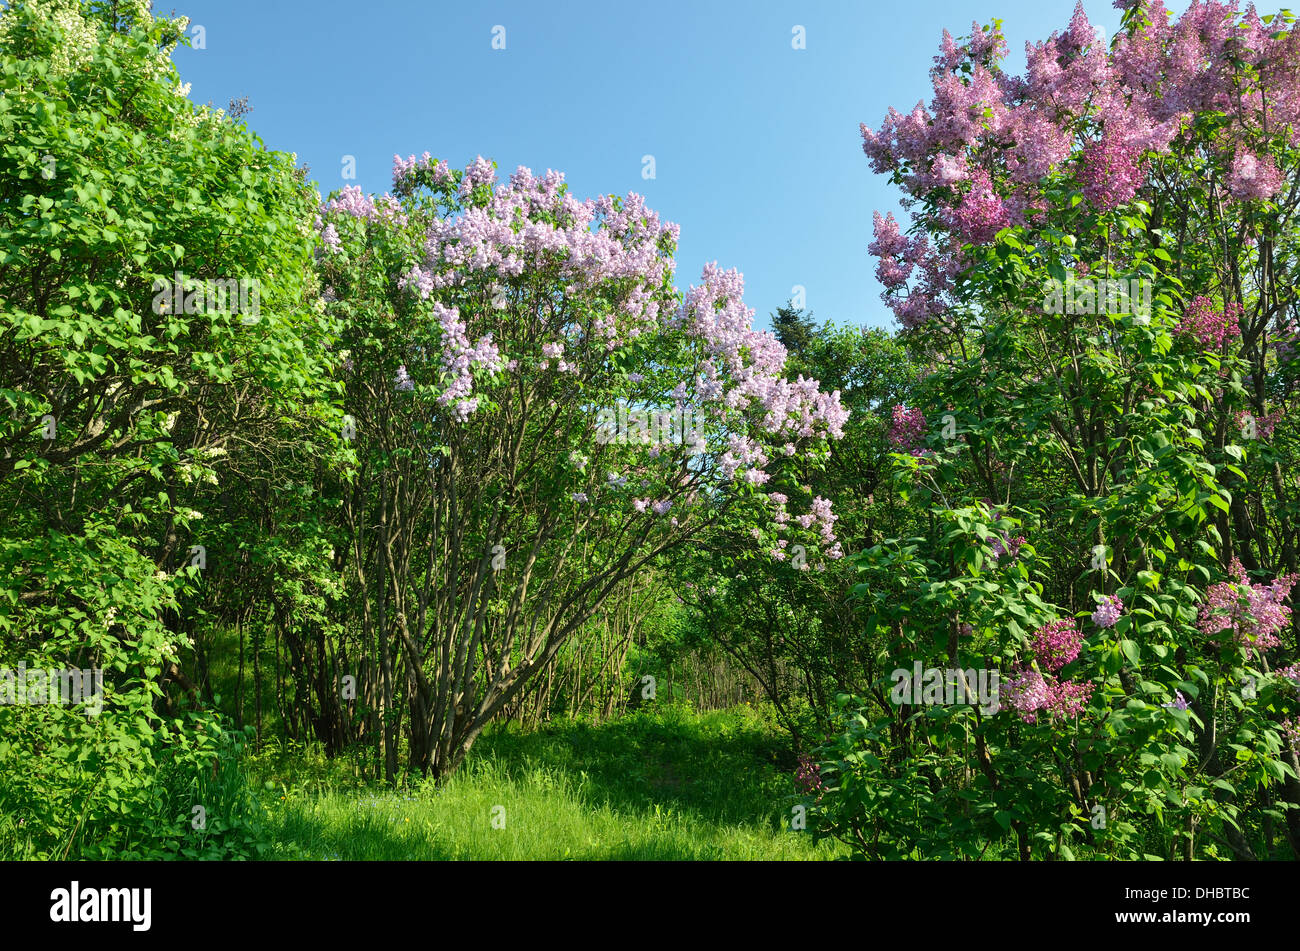 Flowering  lilac shrubs in the spring garden Stock Photo